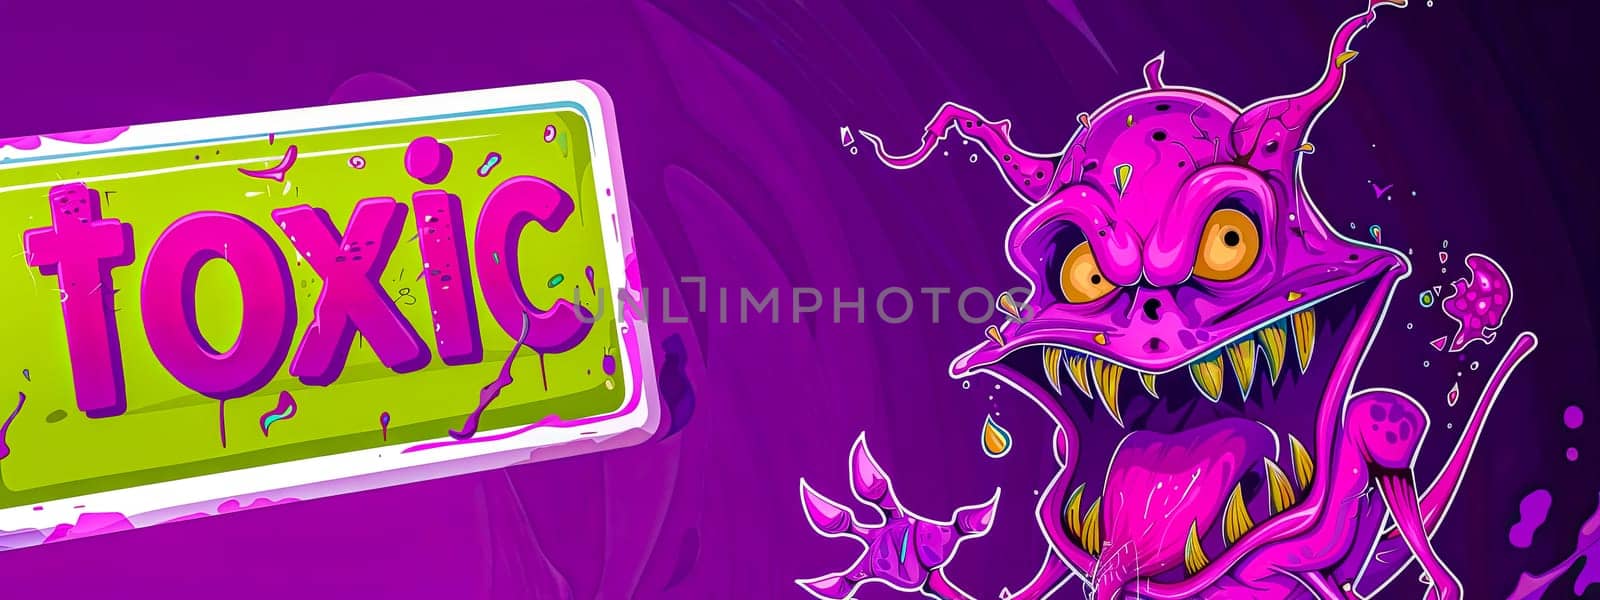 Vibrant toxic monster cartoon banner by Edophoto